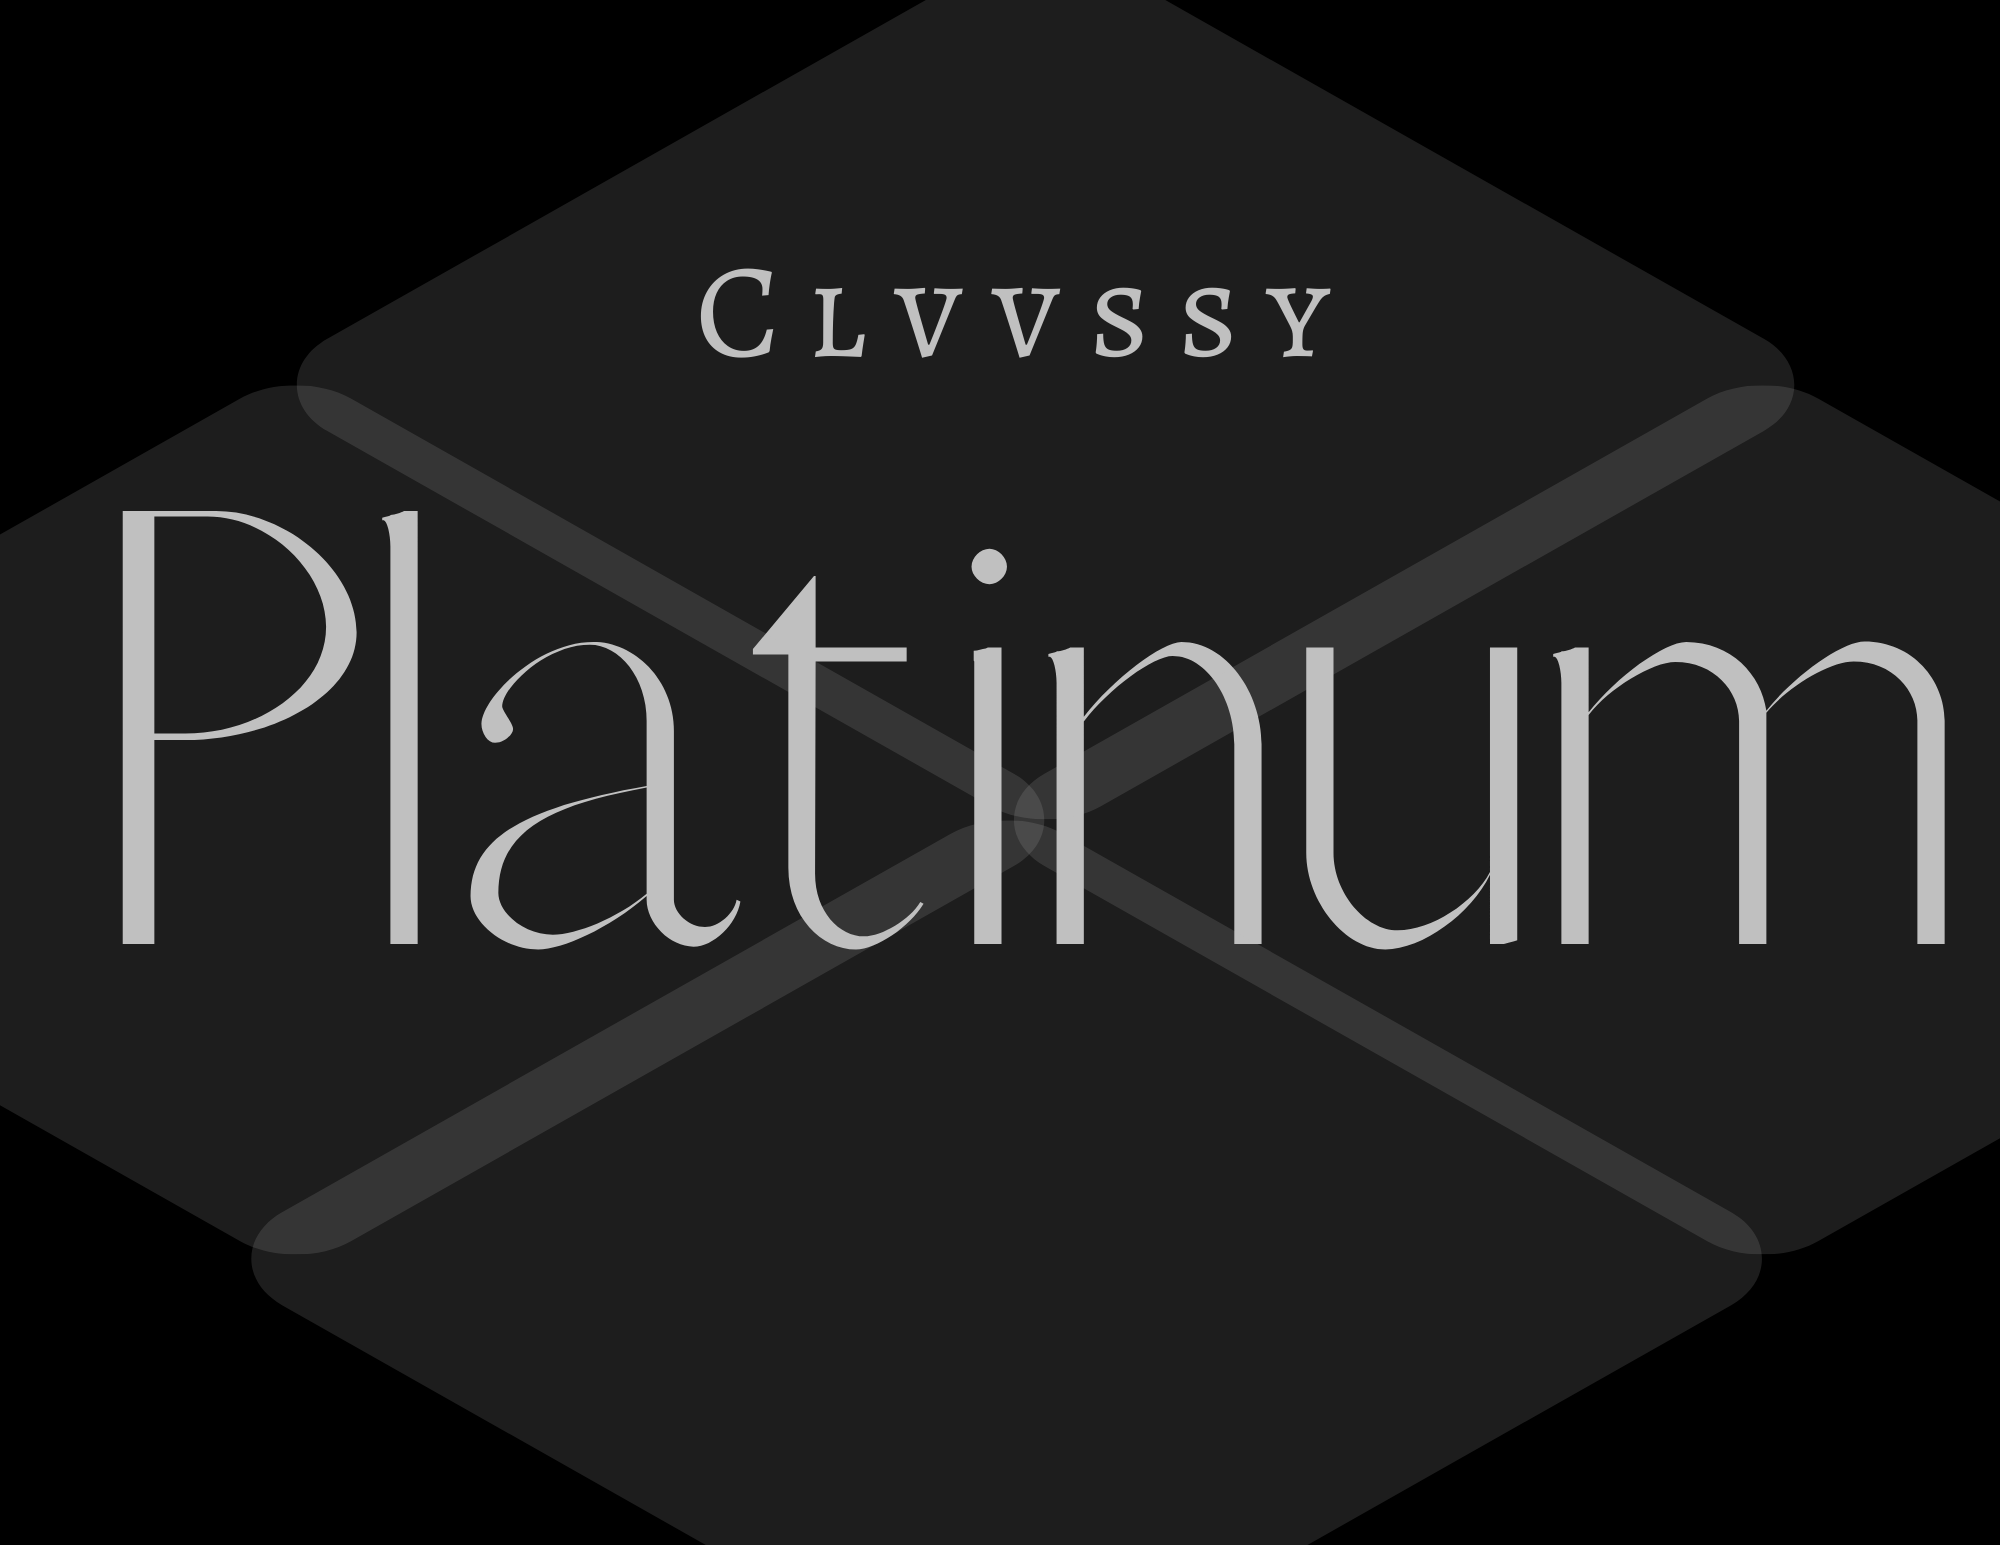 Clvvssy Platinum2 Hr Session40 Images$2 8x10's3 5x7'sLocation ChangeWardrobe Changes$400 - 